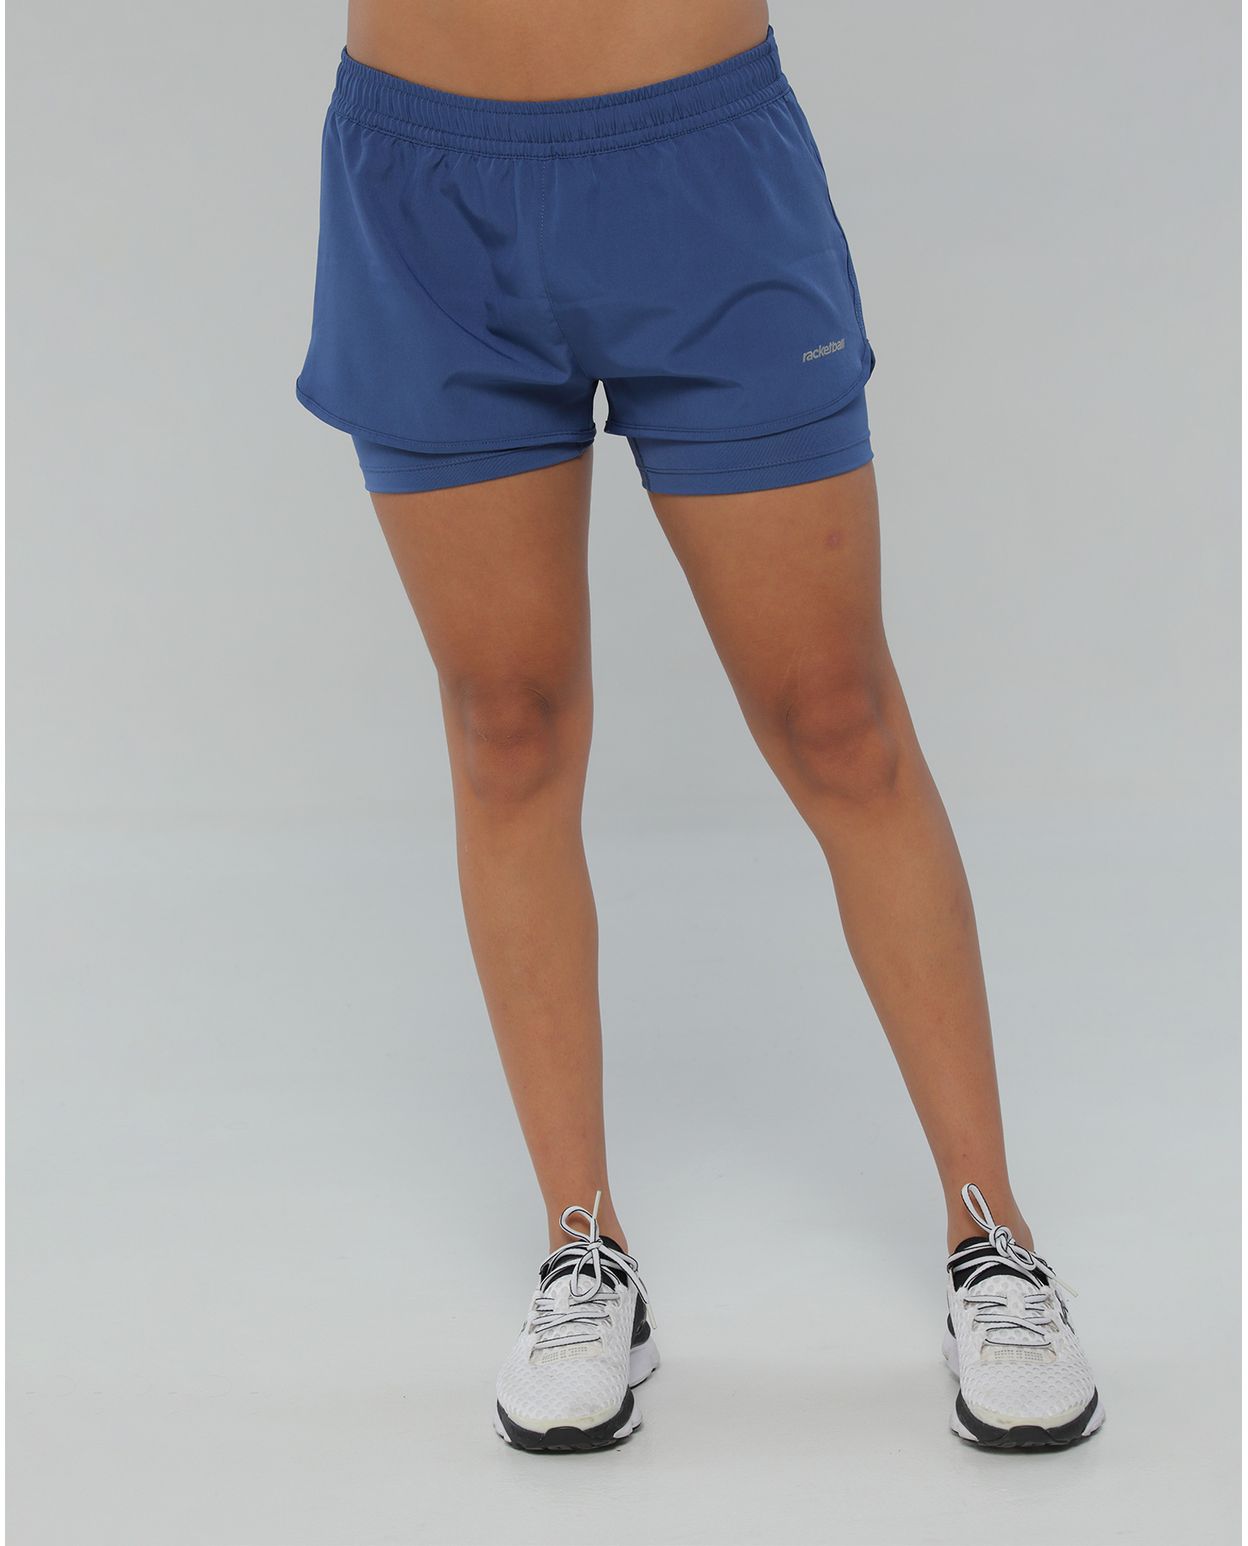 cubierta Distraer marxista Pantaloneta deportiva mujer, con licra interior, color azul - racketball  movil